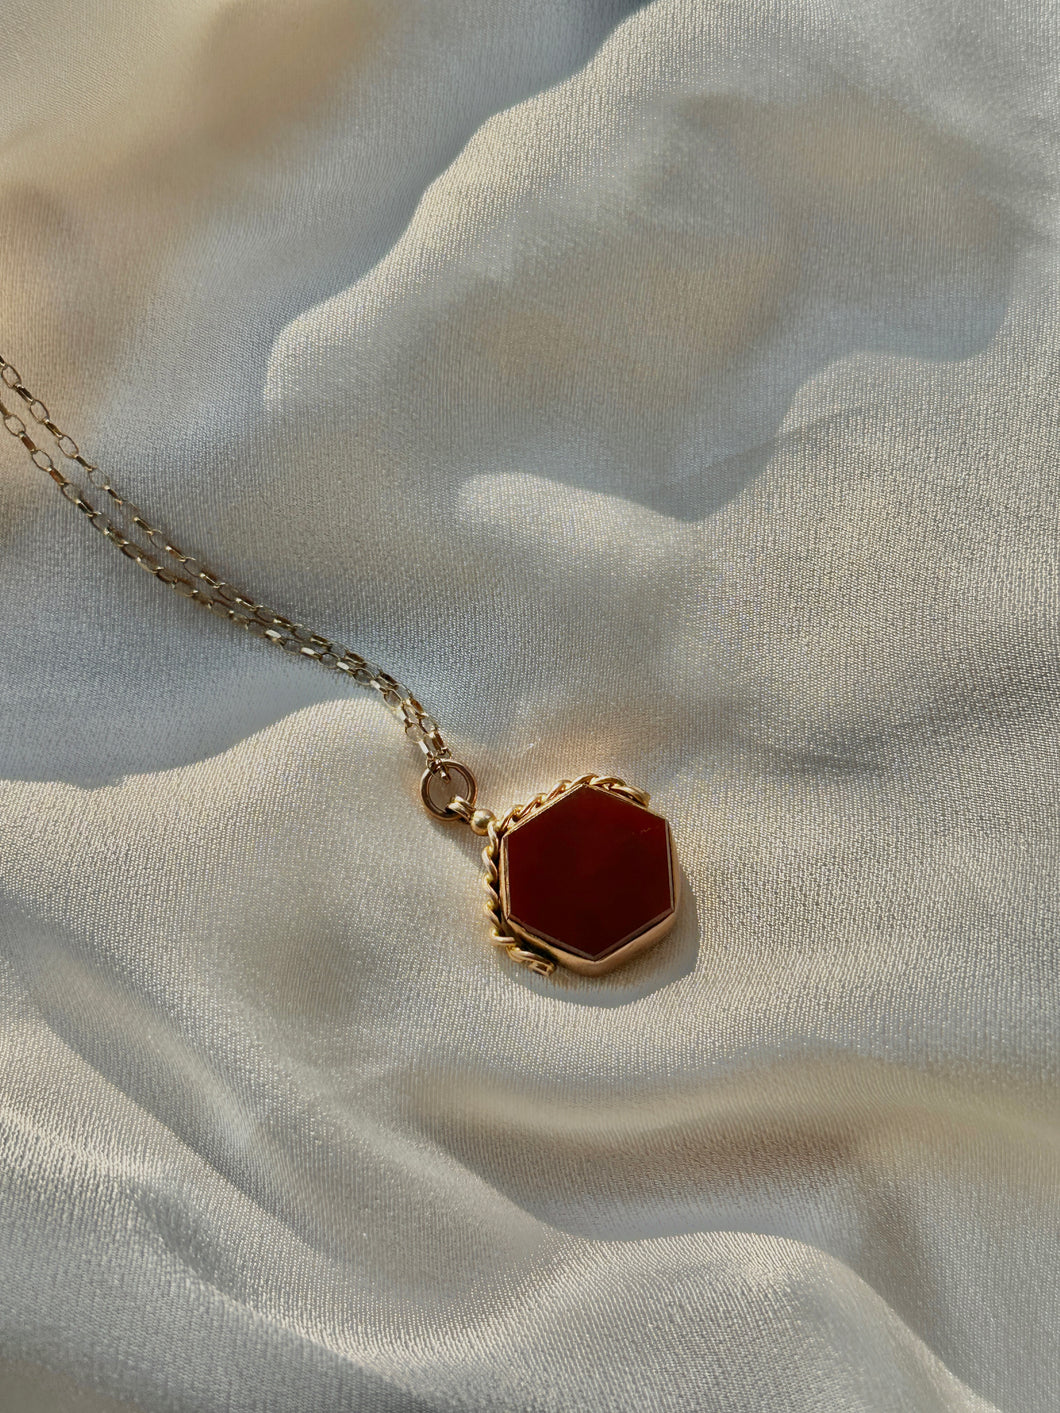 antique gold gemstone fob necklace